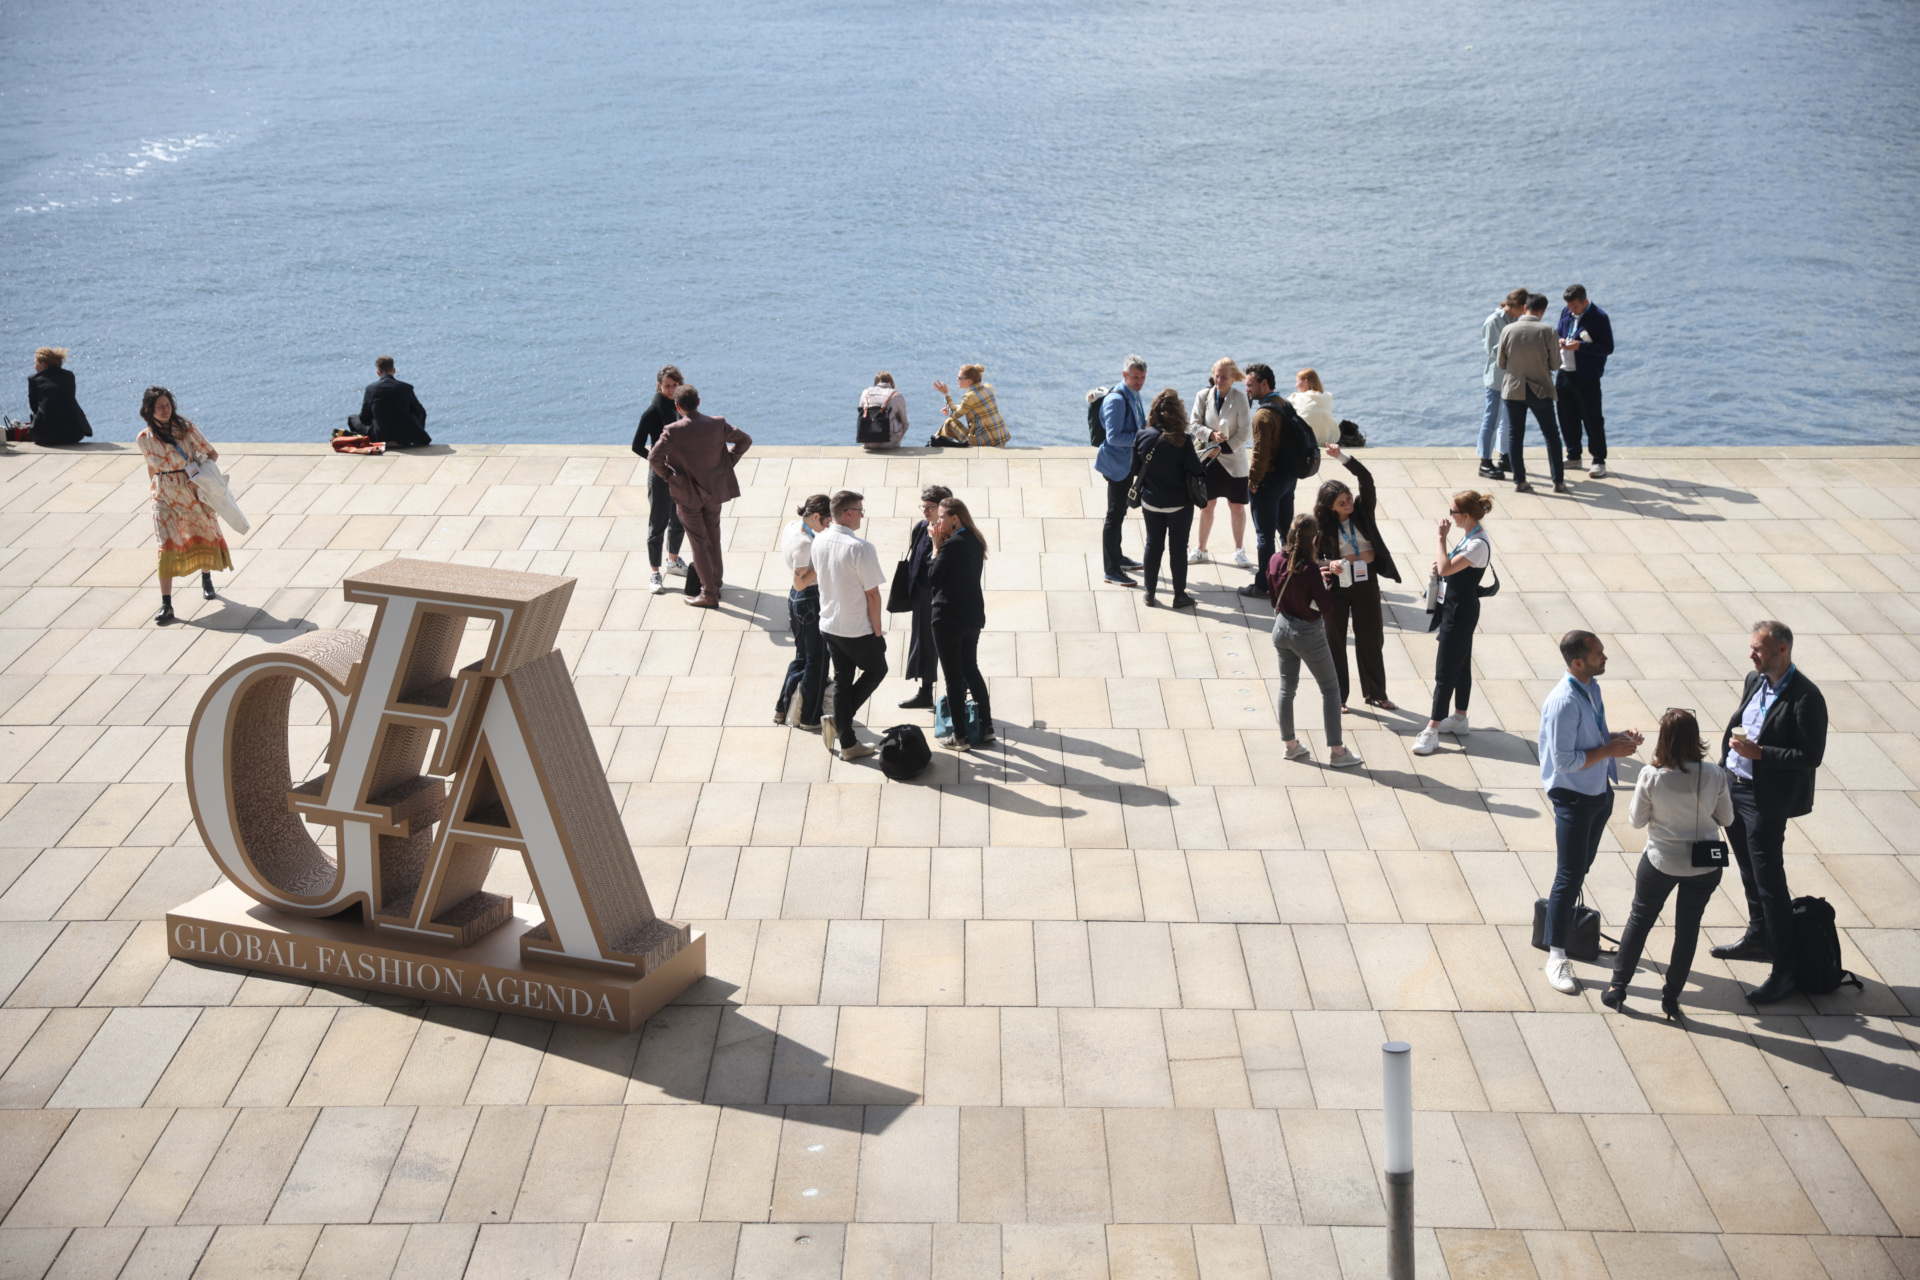 People stood on stone pier overlooking sea by GFA sculpture